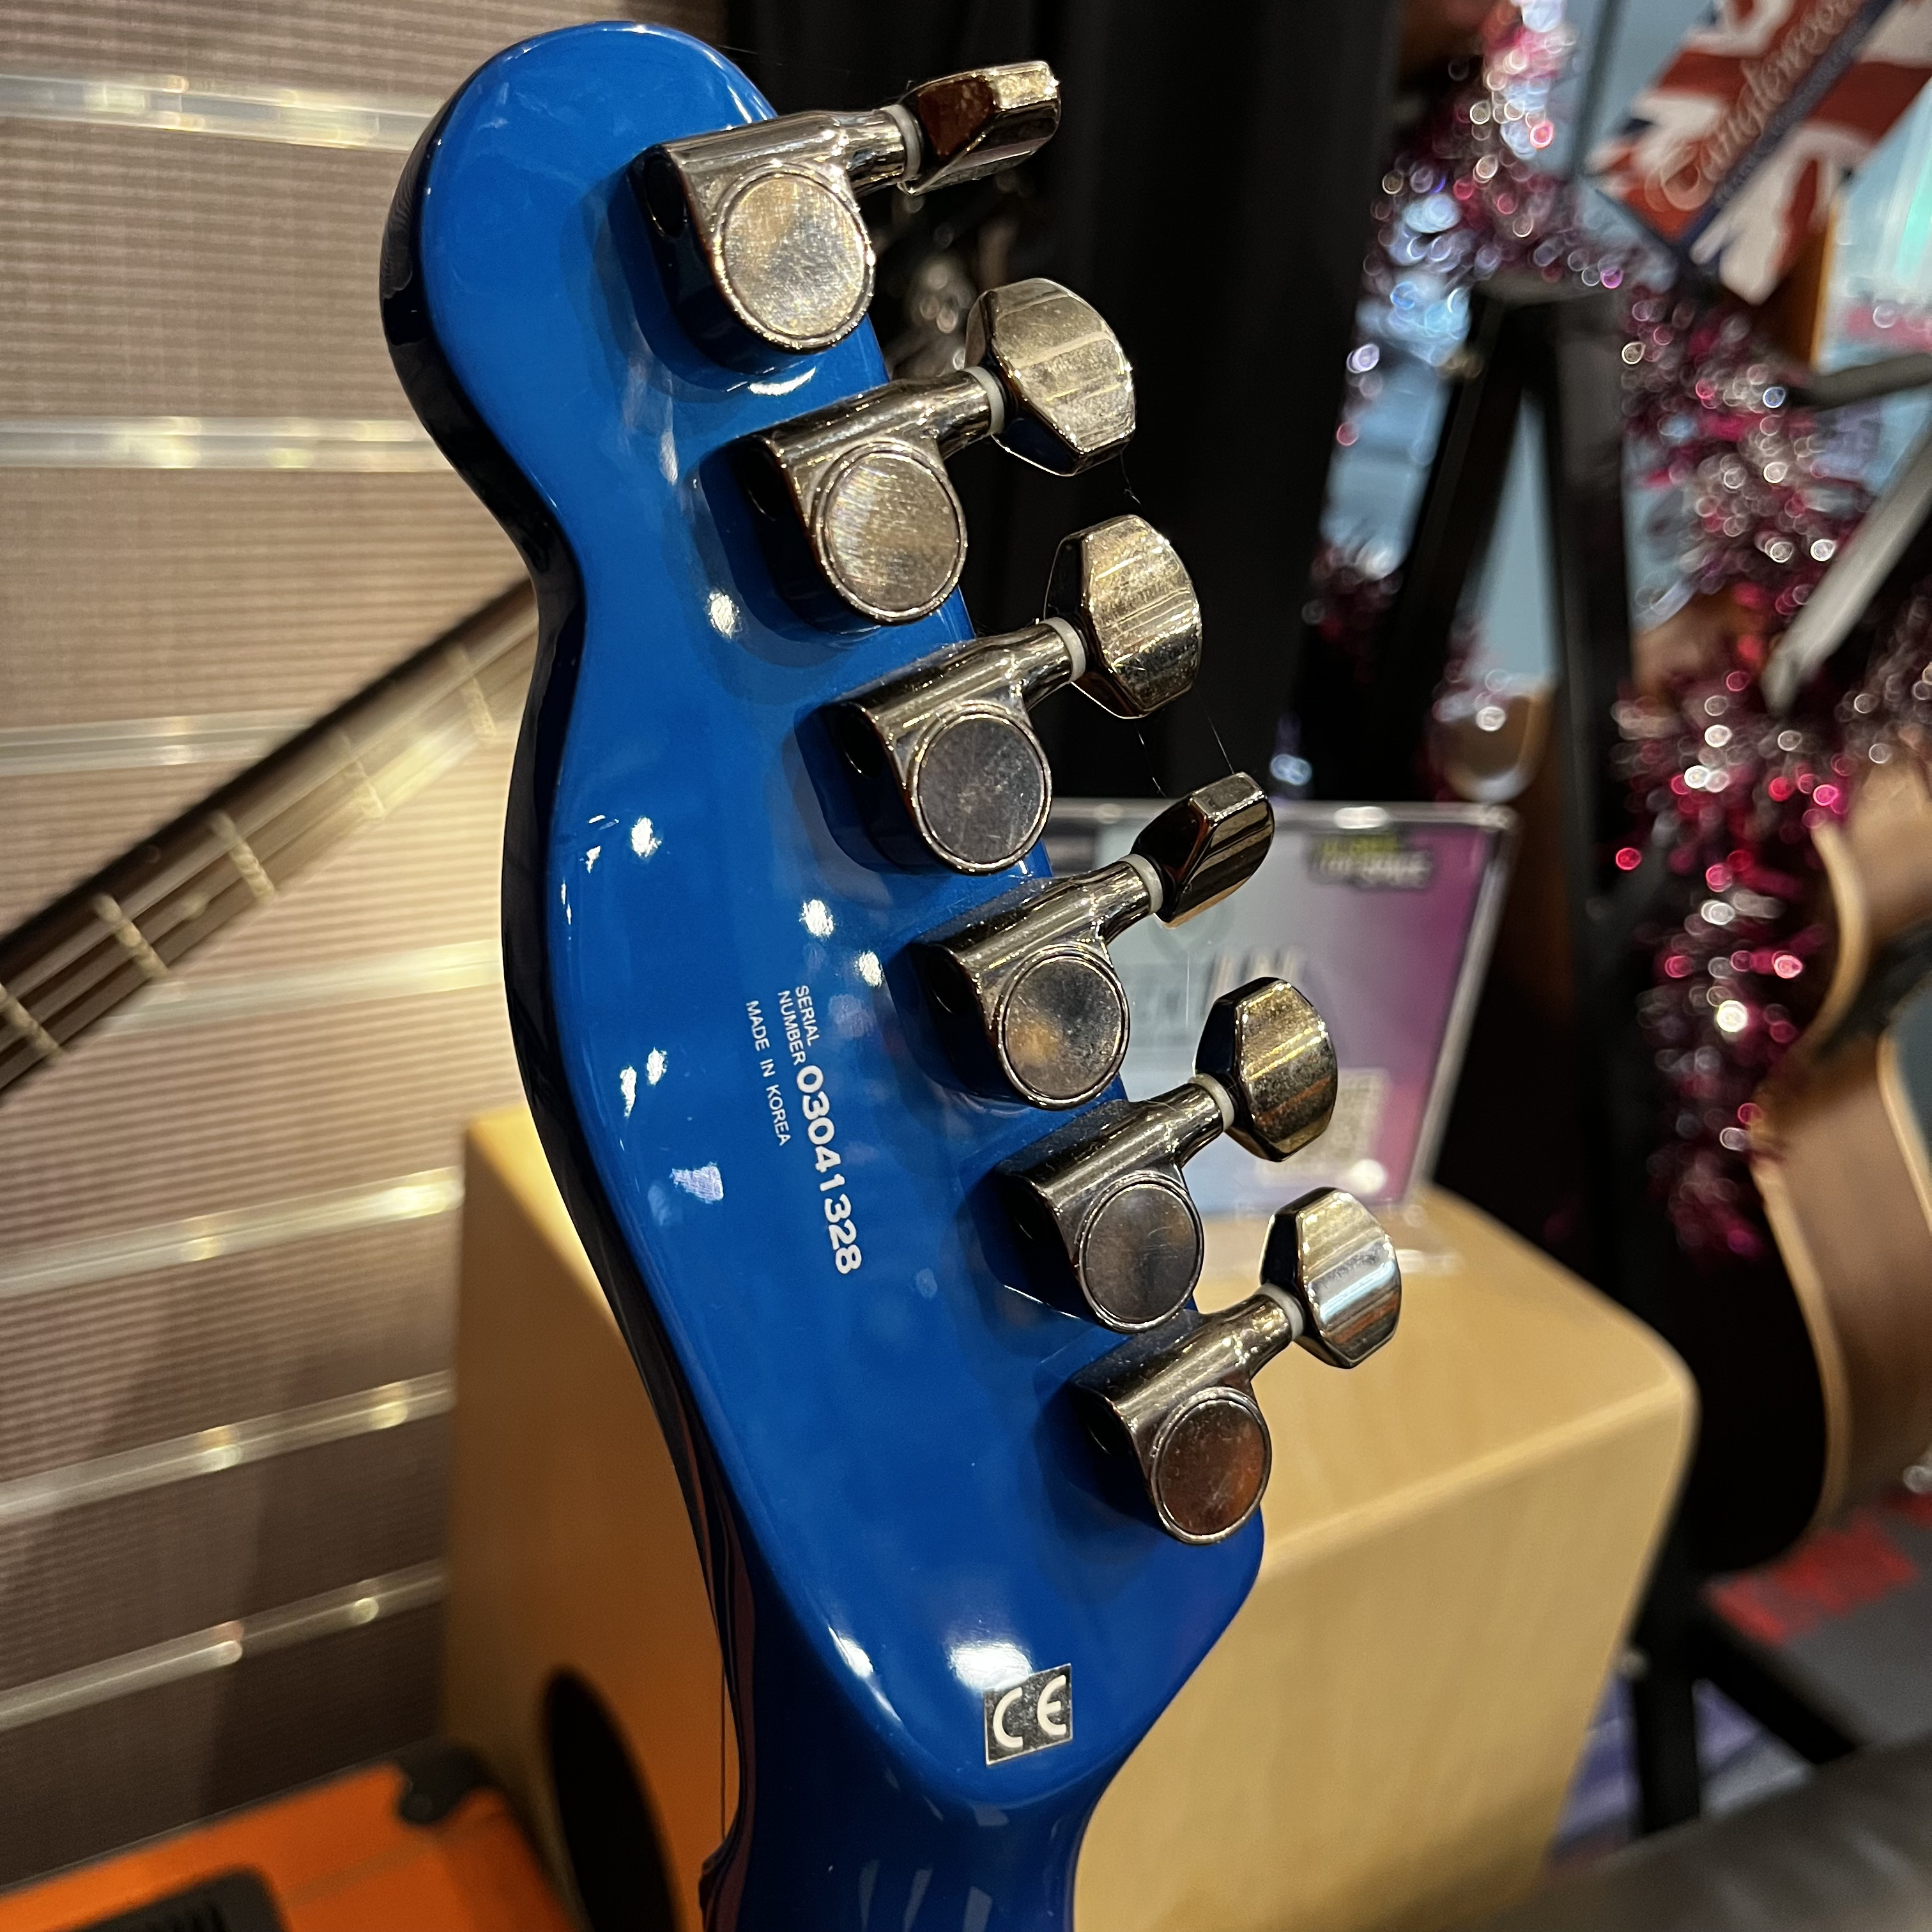 Fender Esquire Custom GT Telecaster Electric Guitar (Blue w/ White Racing Stripes)